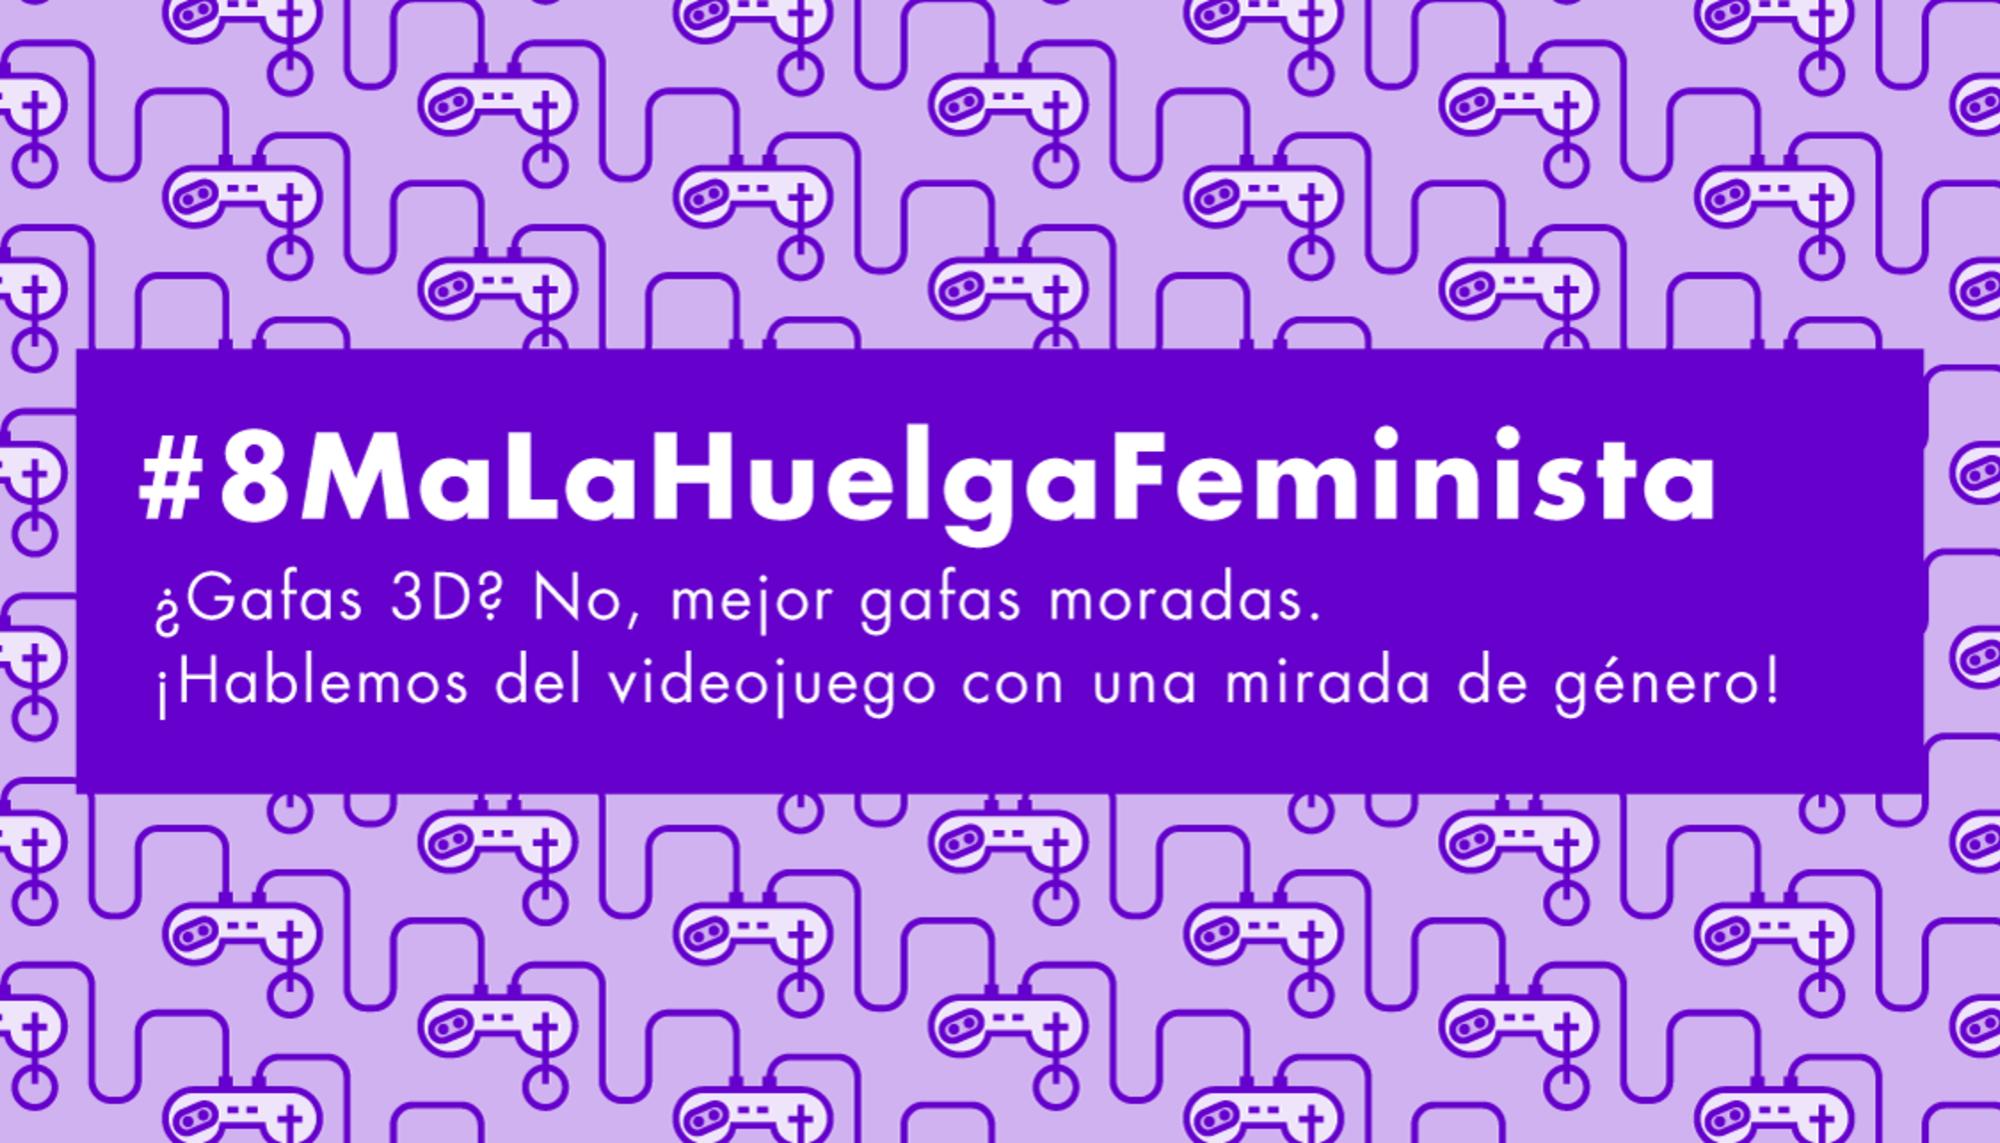 #8MaLaHuelgaFeminista. Videojuegos con perspectiva de género.